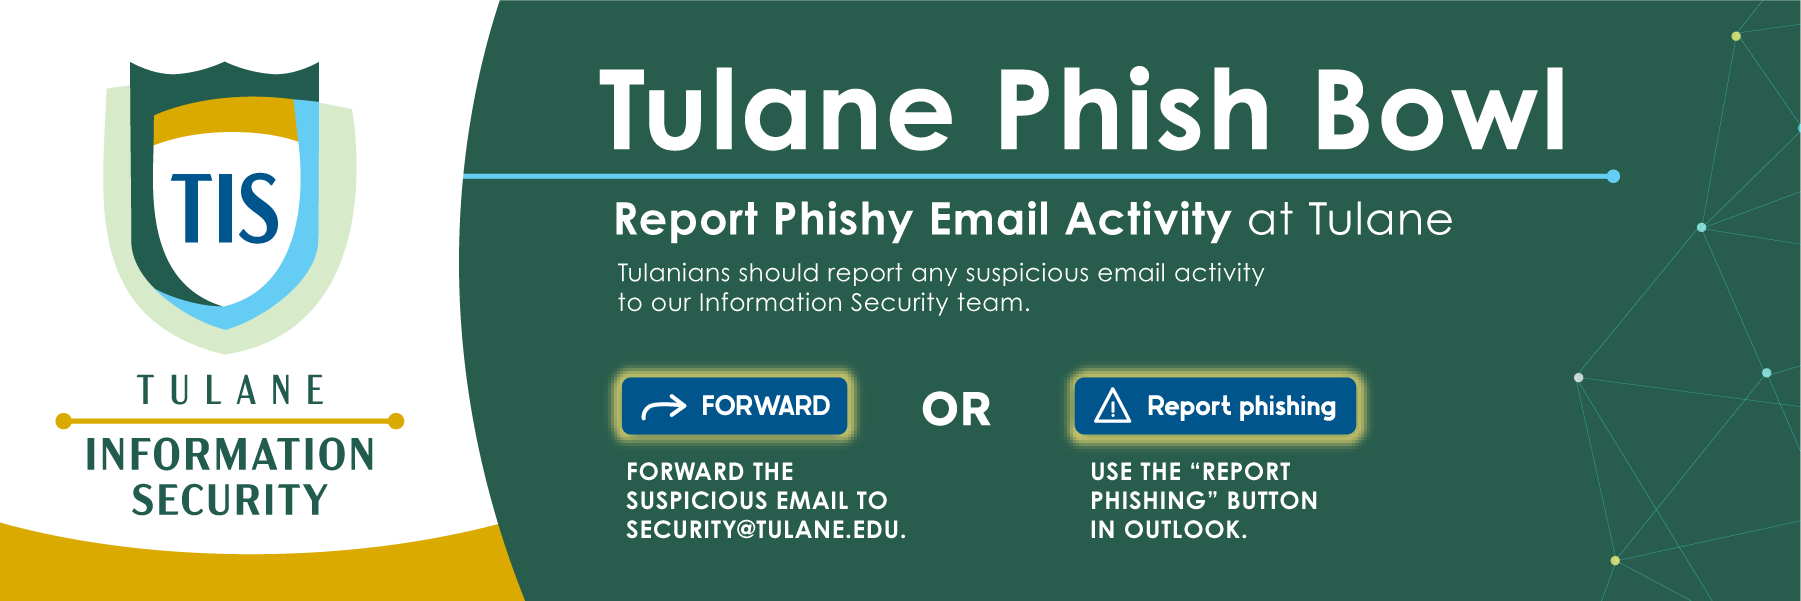 Tulane Information Security Office Phish Bowl